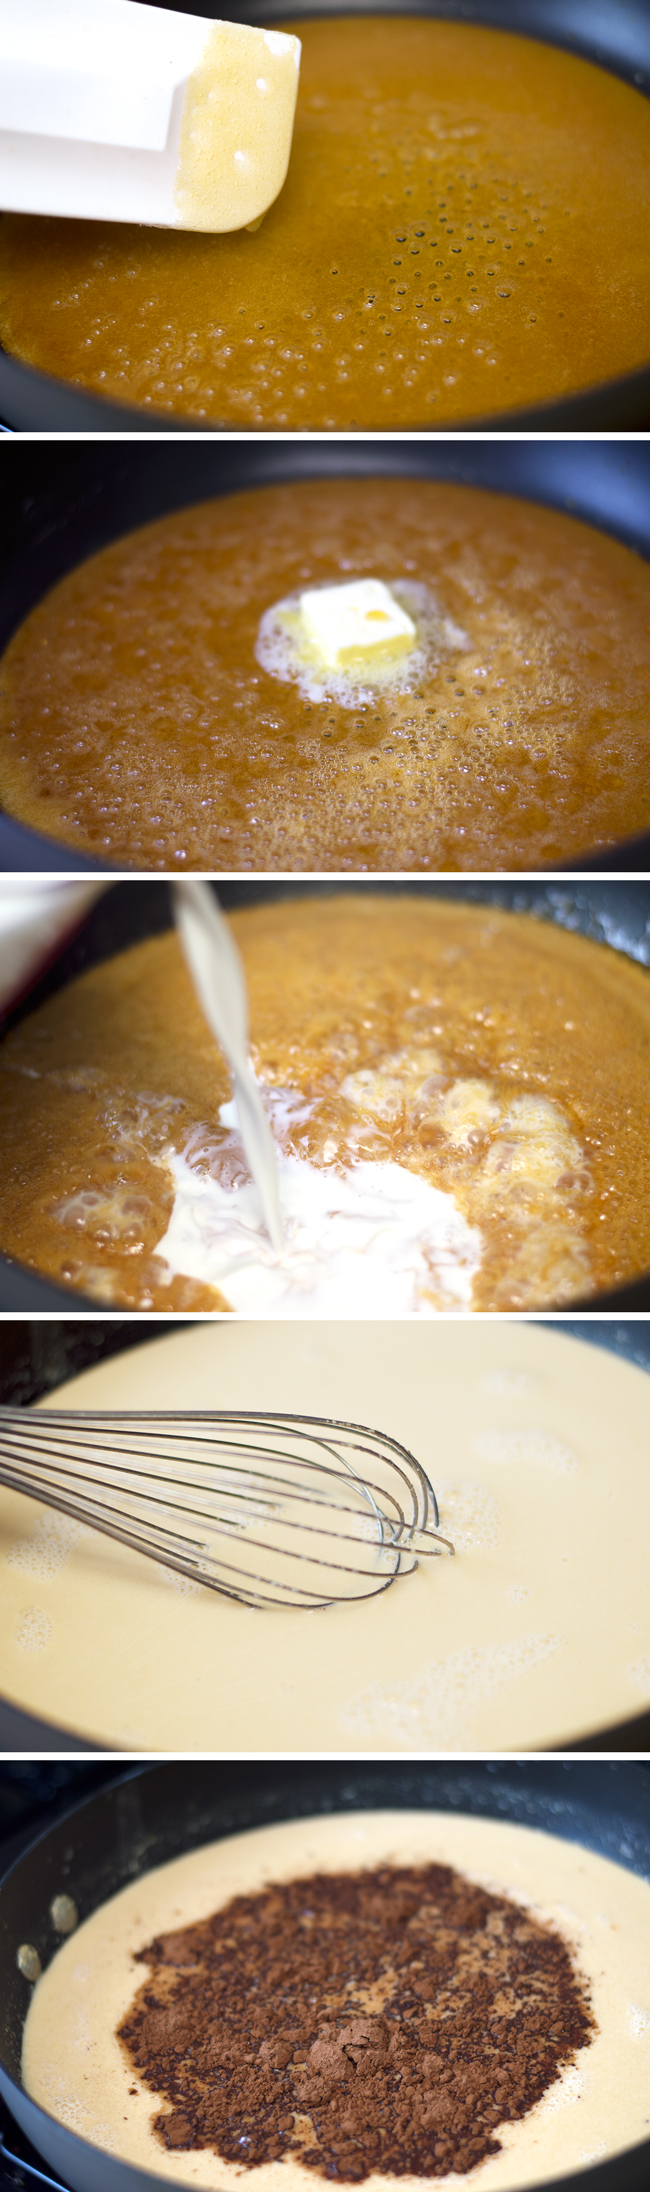 Making-Salted-Caramel-Hot-Chocolate